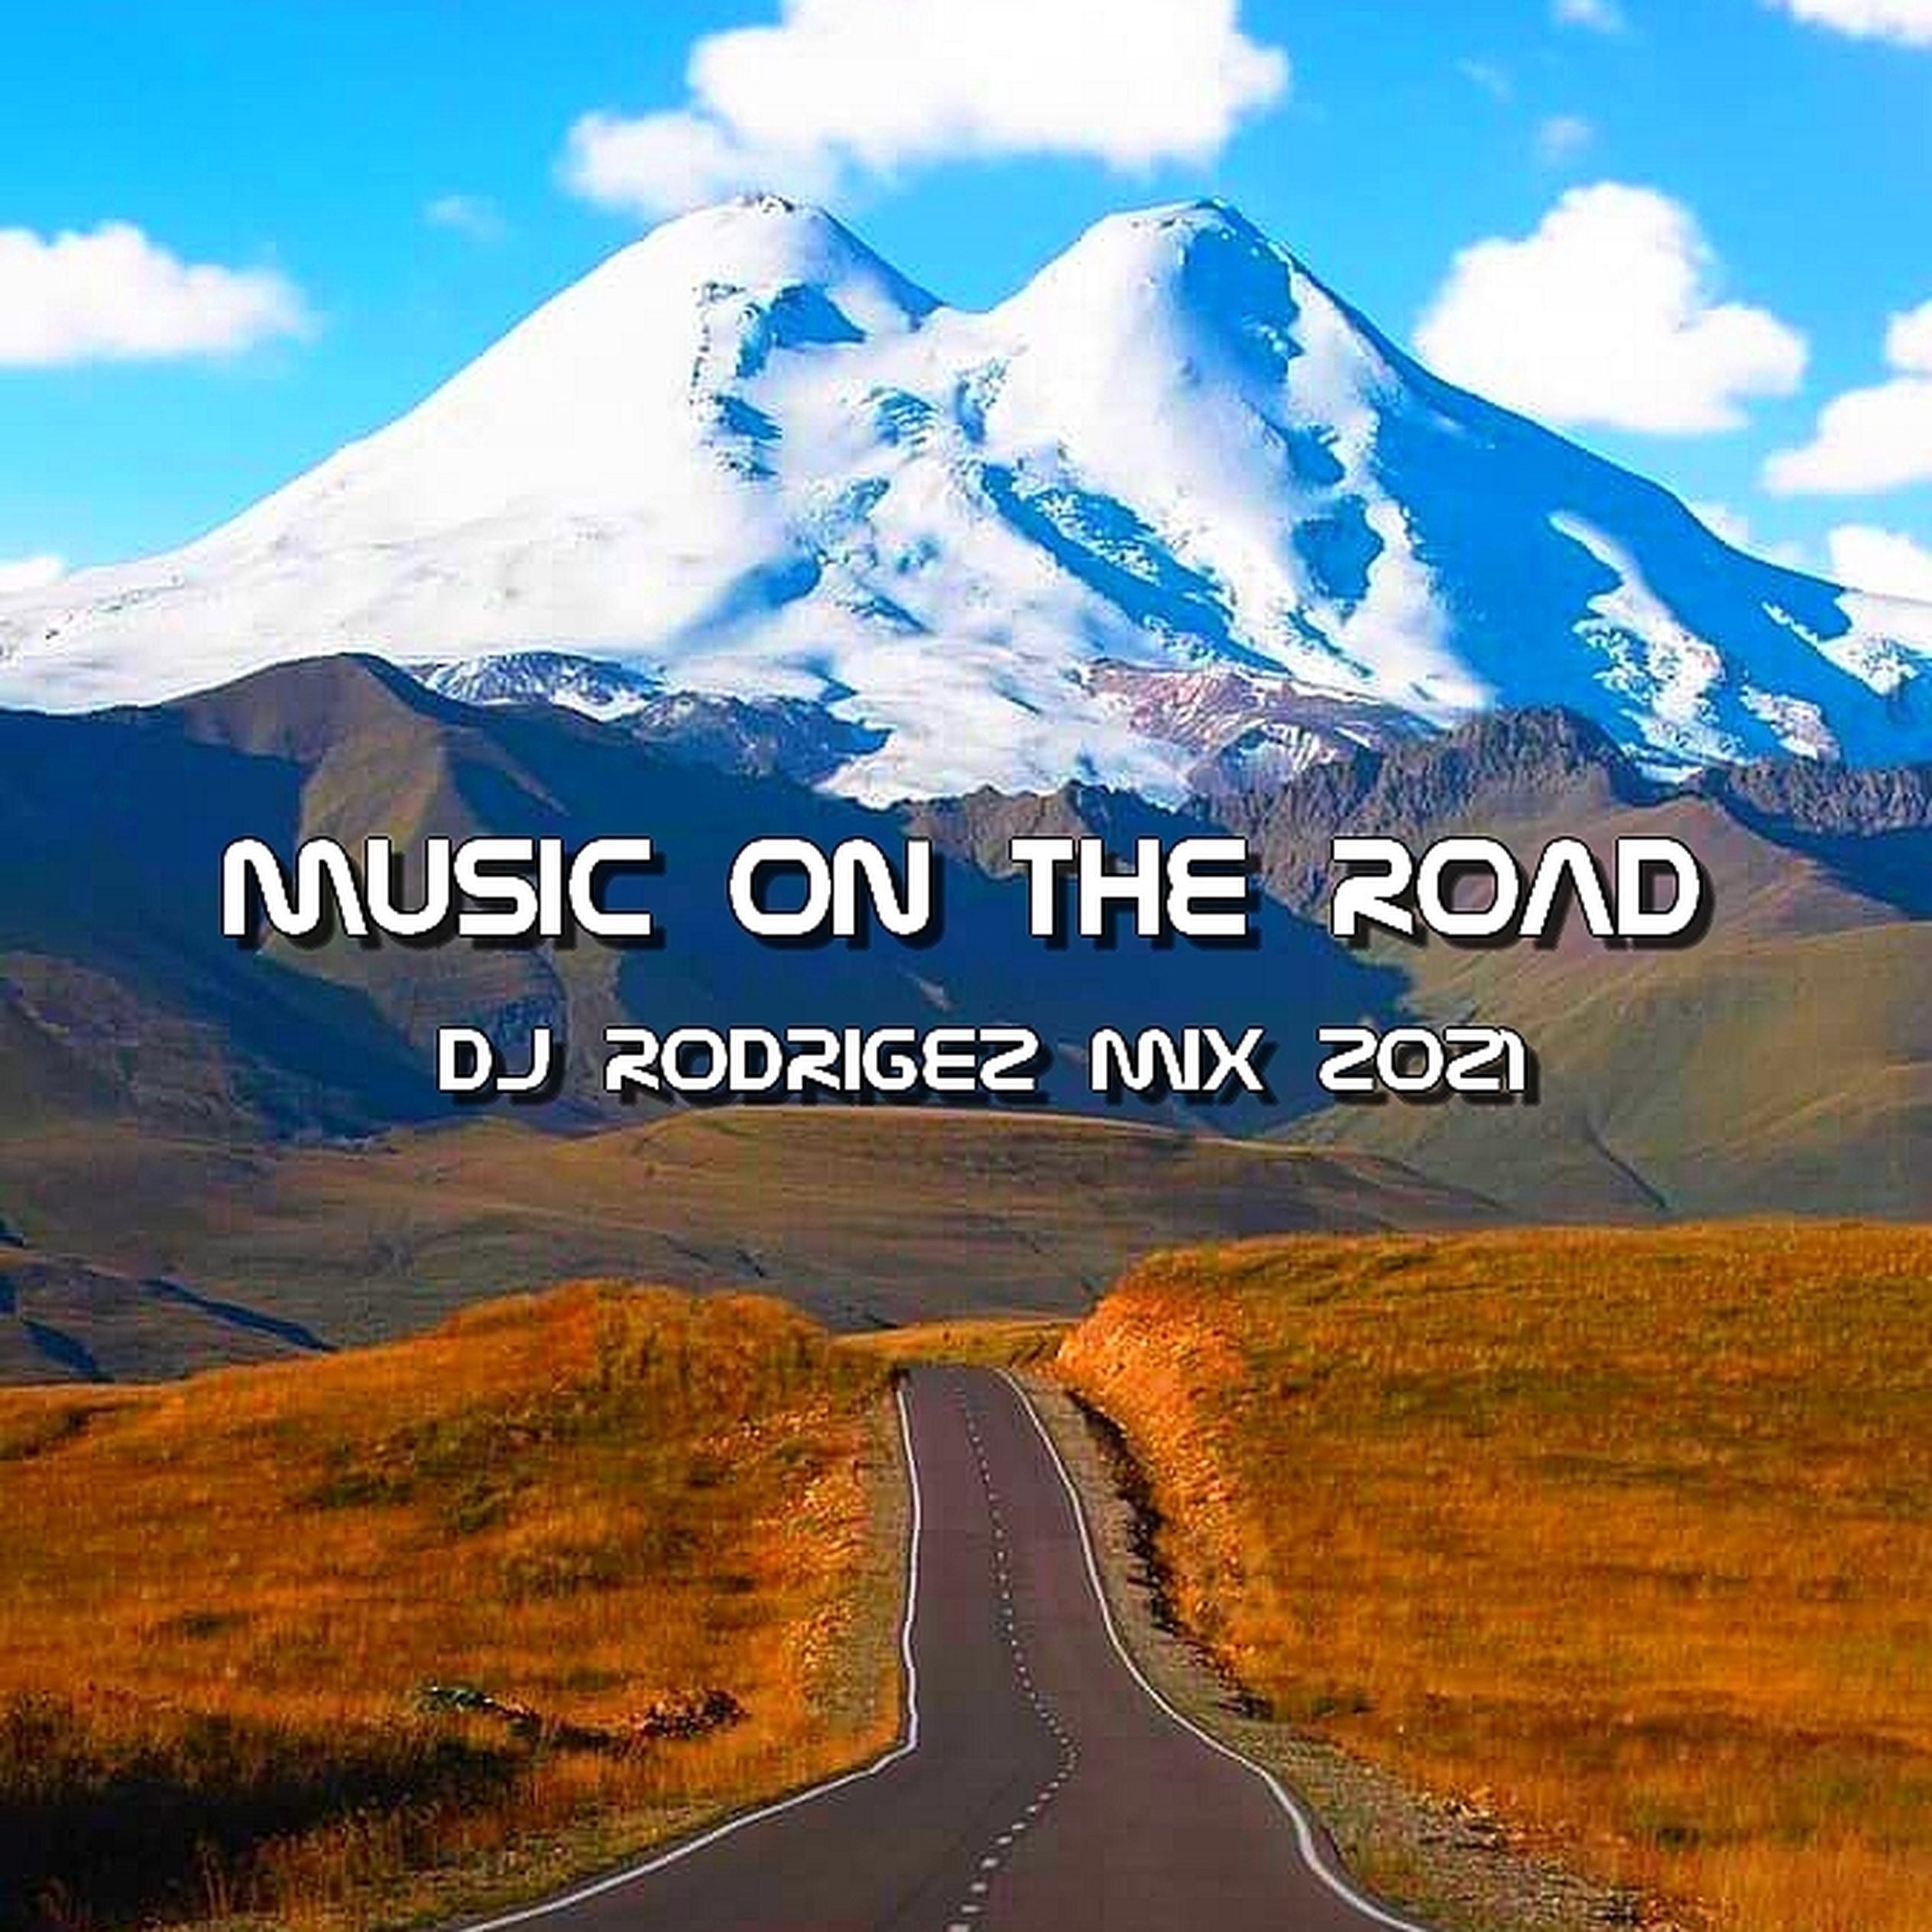 Твоя дорога слушать. Music for the Road. Music в дорогу. End of the Road DJ Antonio feat. Aris обложка.